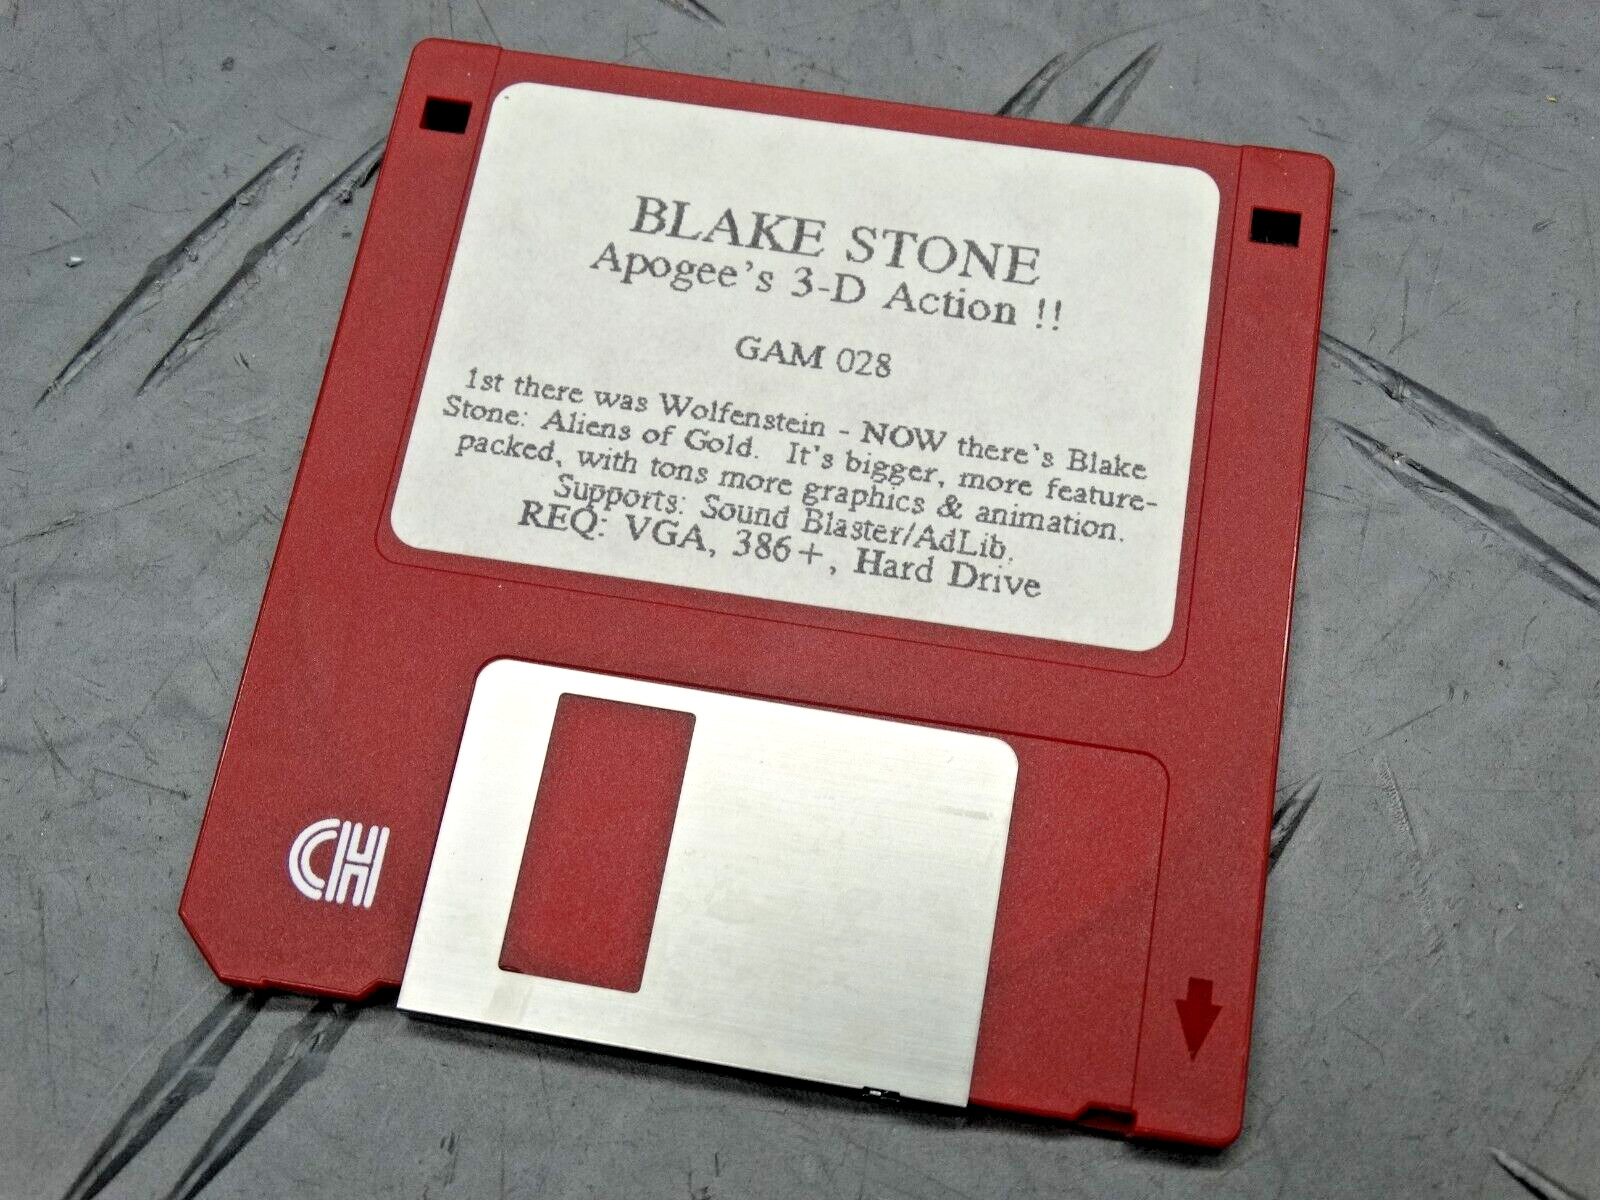 Blake Stone Apogee's #D Action RARE Game Red Floppy 3.5” Floppy Software Vintage